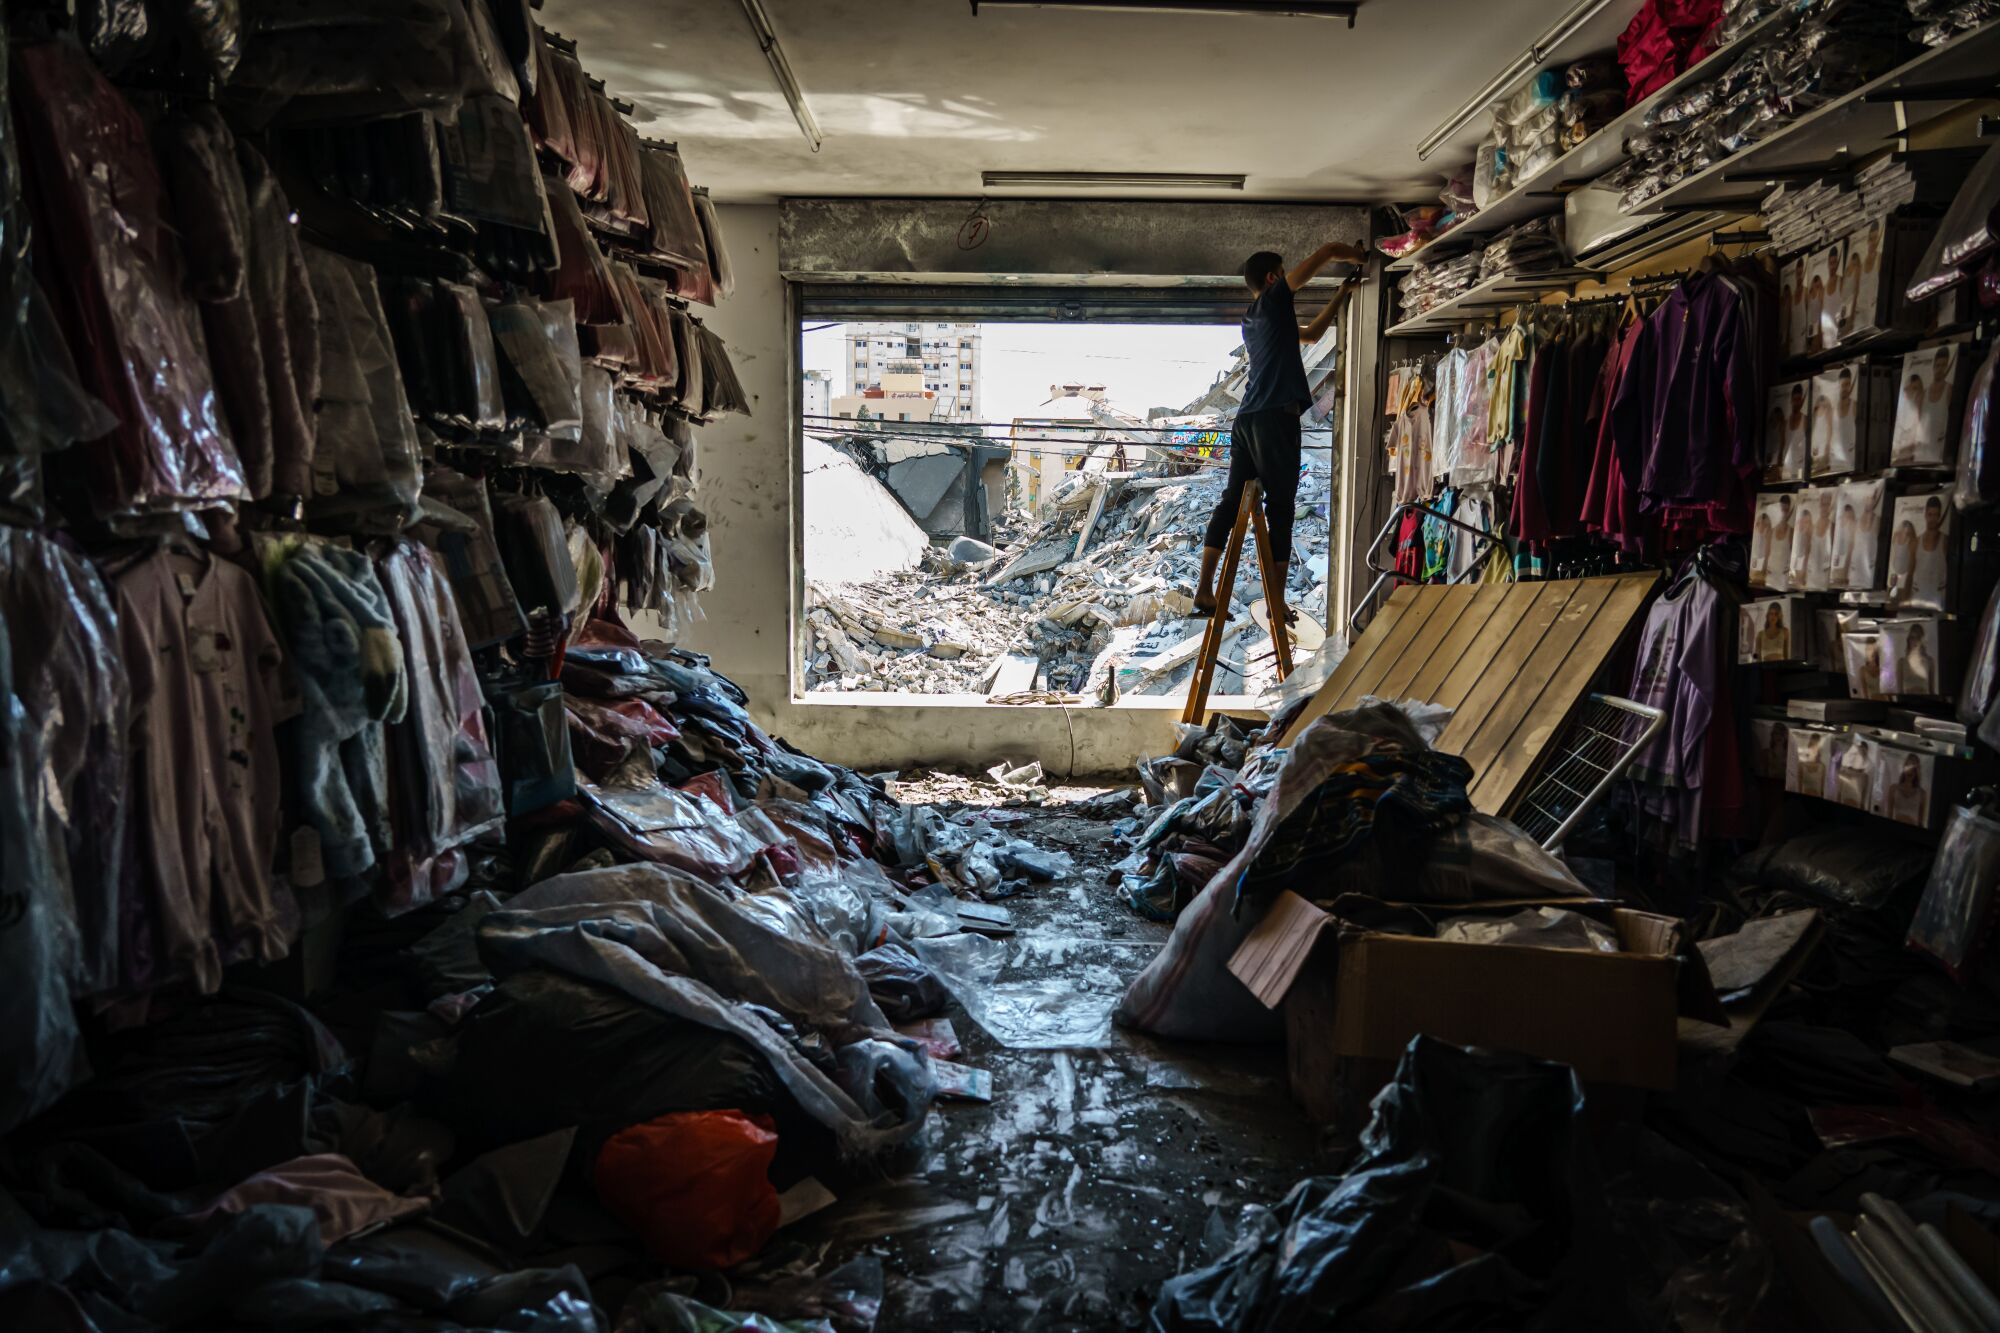  A Gaza shop sits in disrepair 